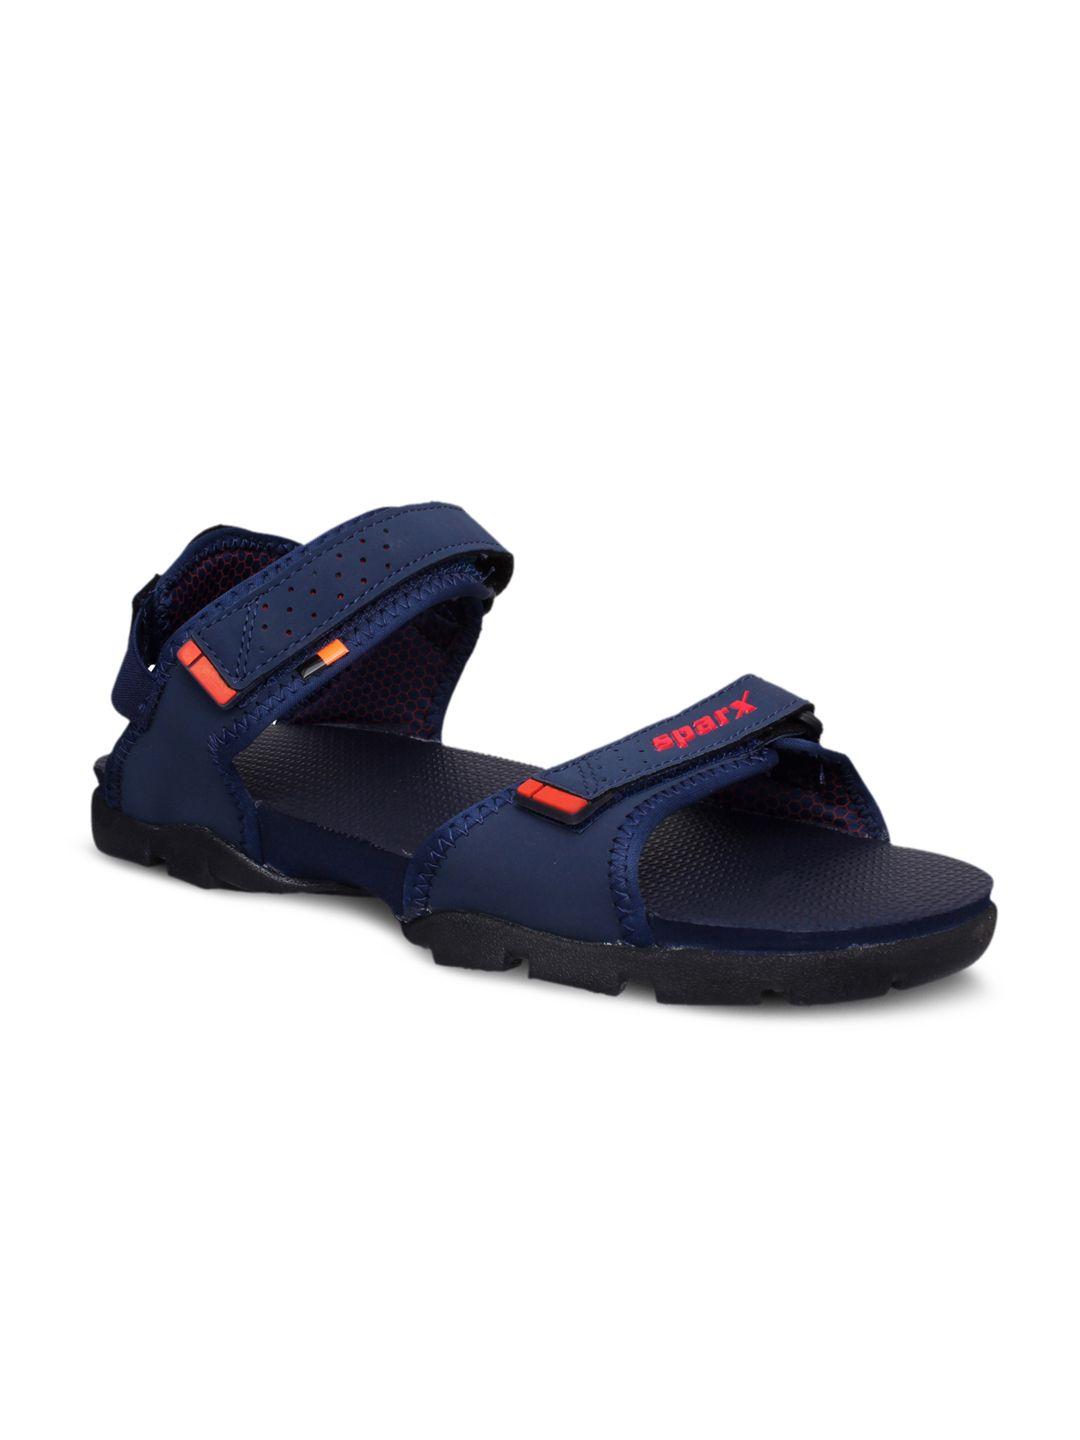 sparx men navy blue & red comfort sandals